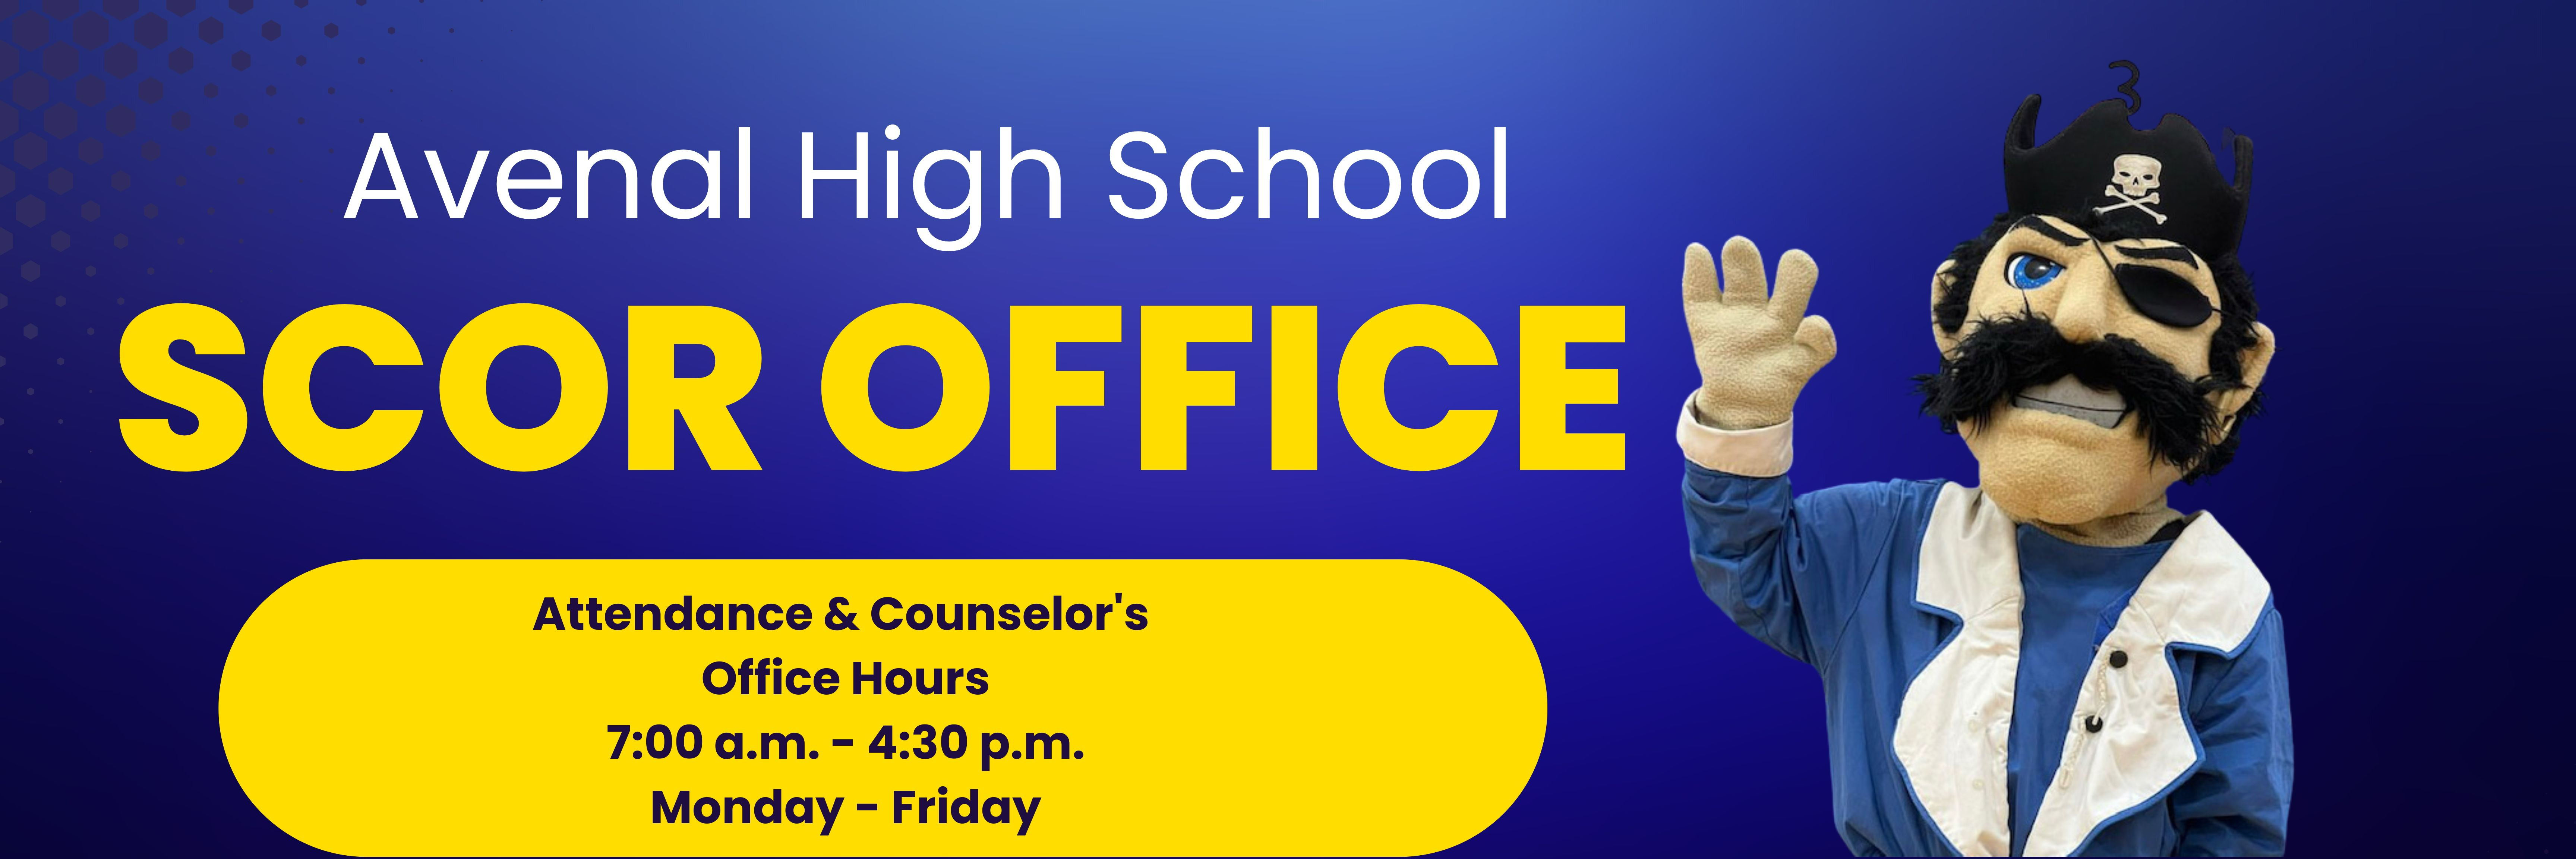 avenal high school scor office attendance & counselor office hours 7:00 - 4:30 Monday - Friday